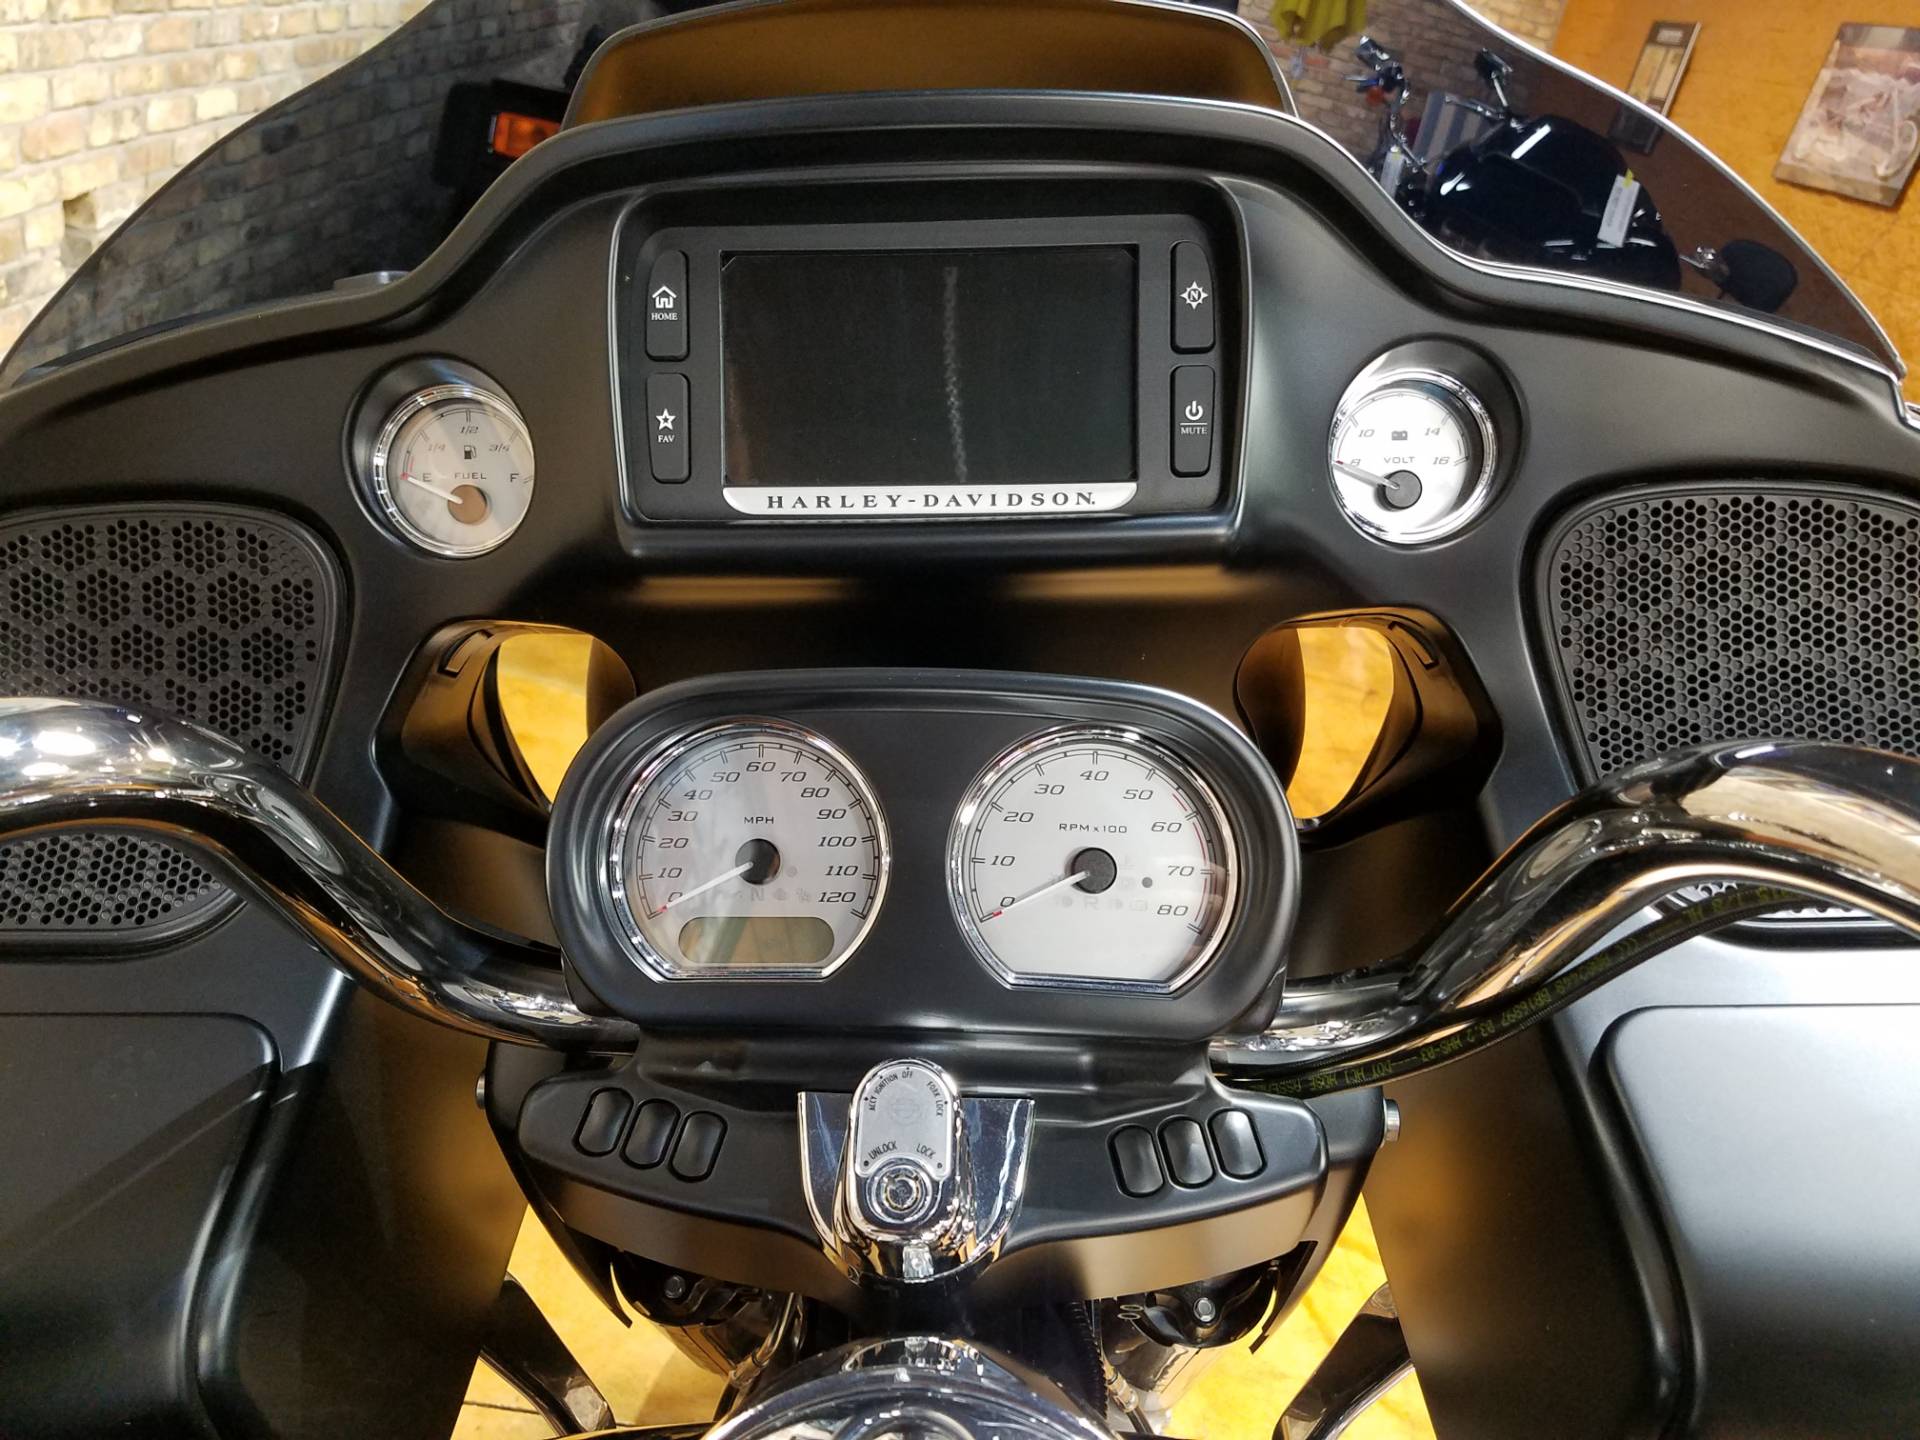 Used 2016 Harley Davidson Road Glide Special Motorcycles In Big Bend Wi 4349 Vivid Black